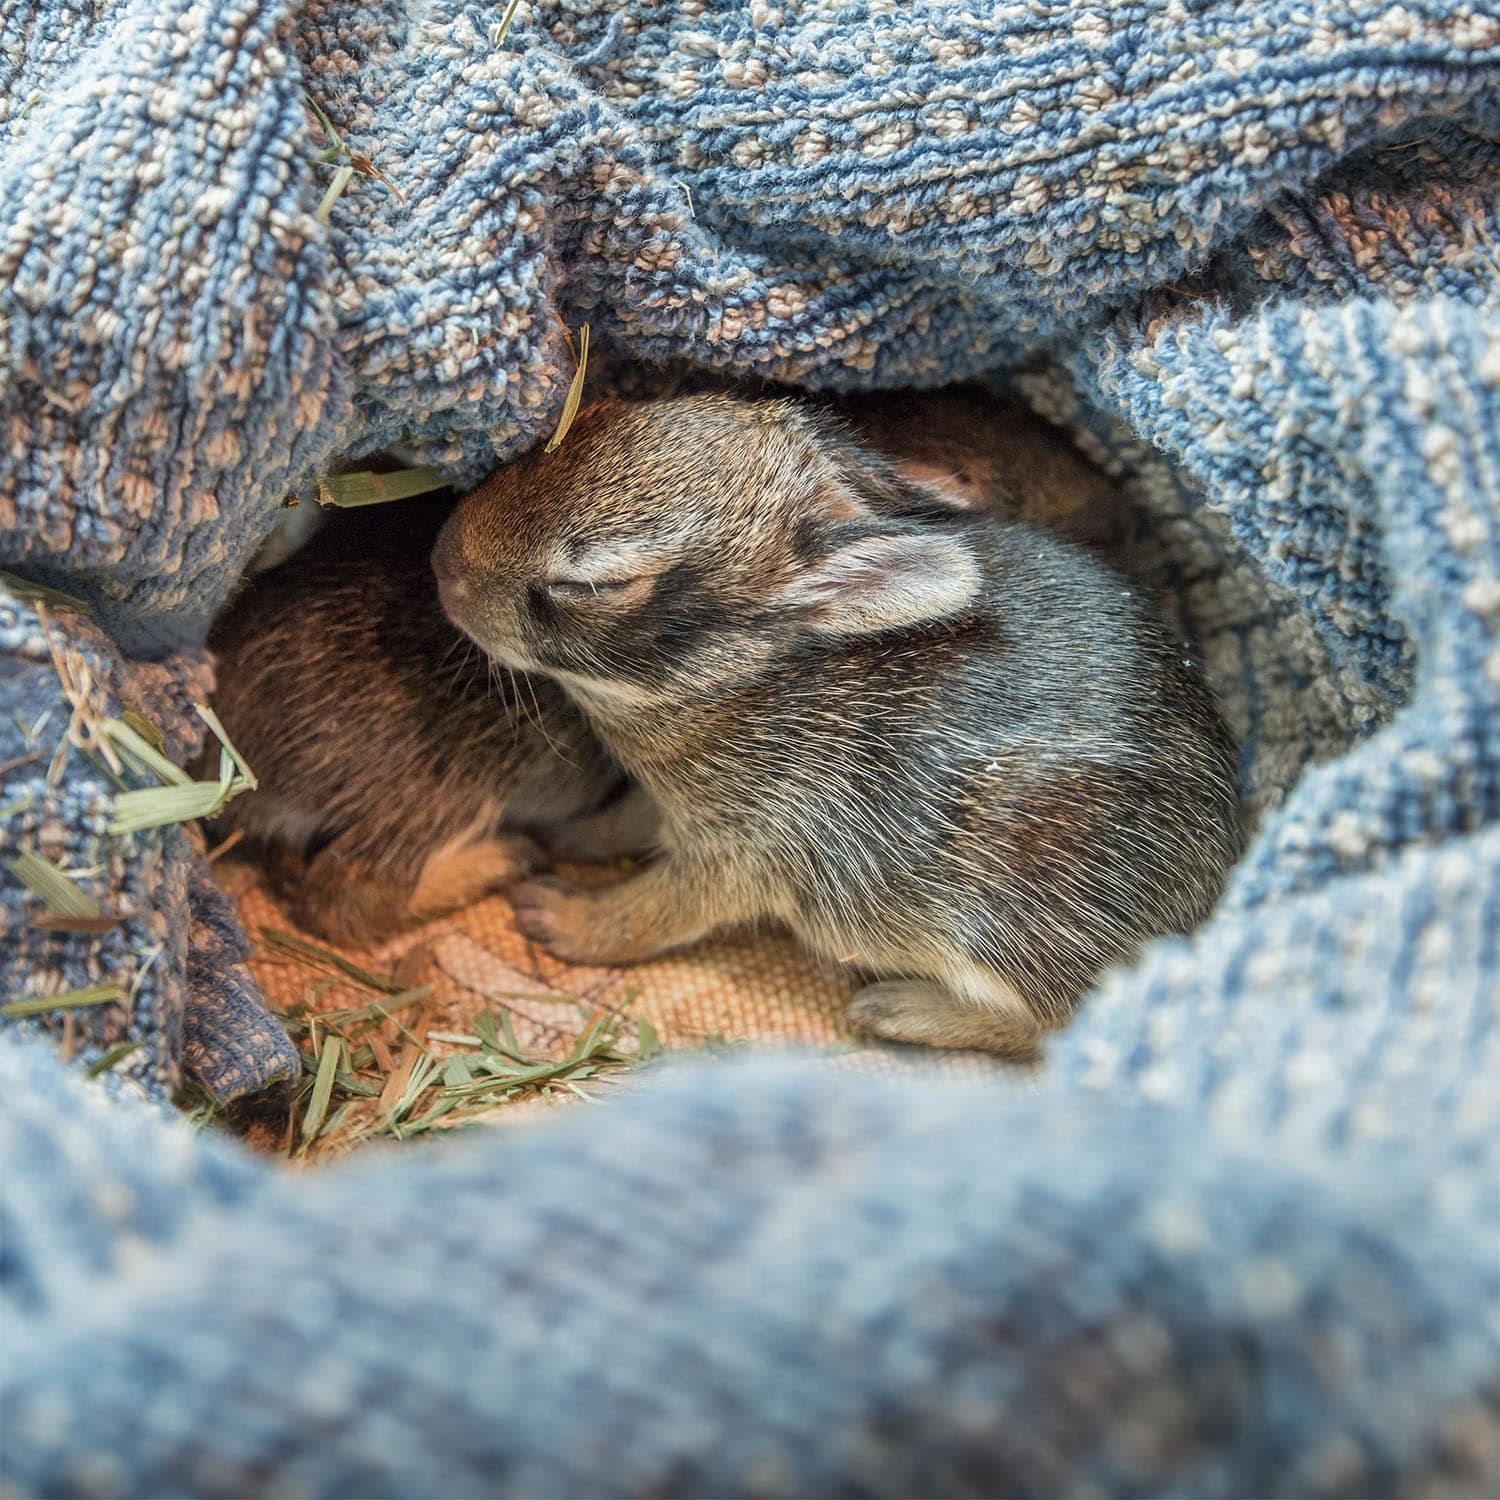 Orphaned baby bunnies sleeping in a blanket